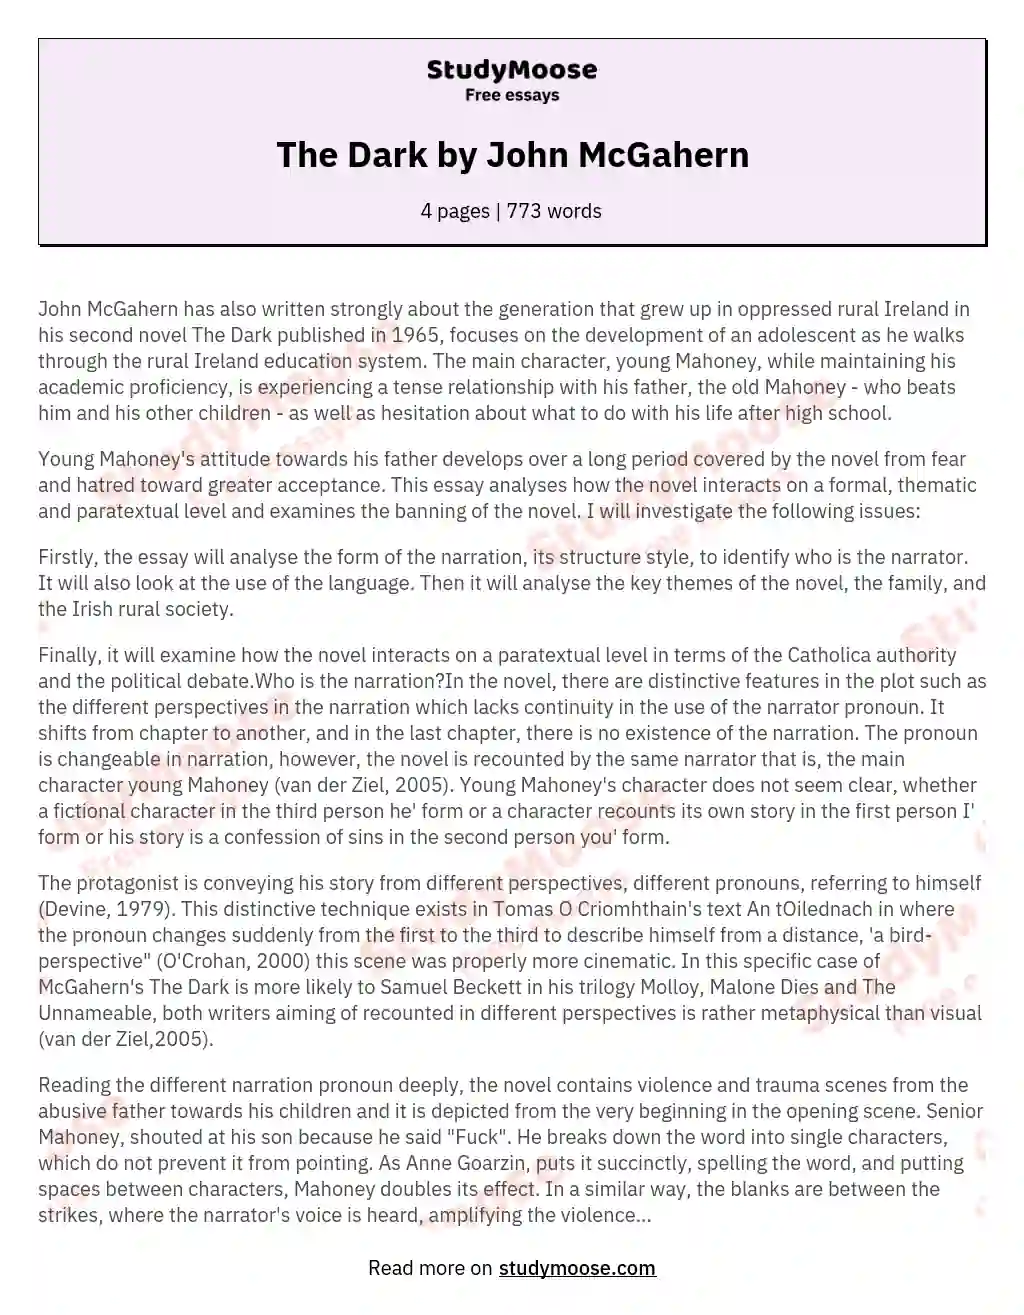 The Dark by John McGahern essay